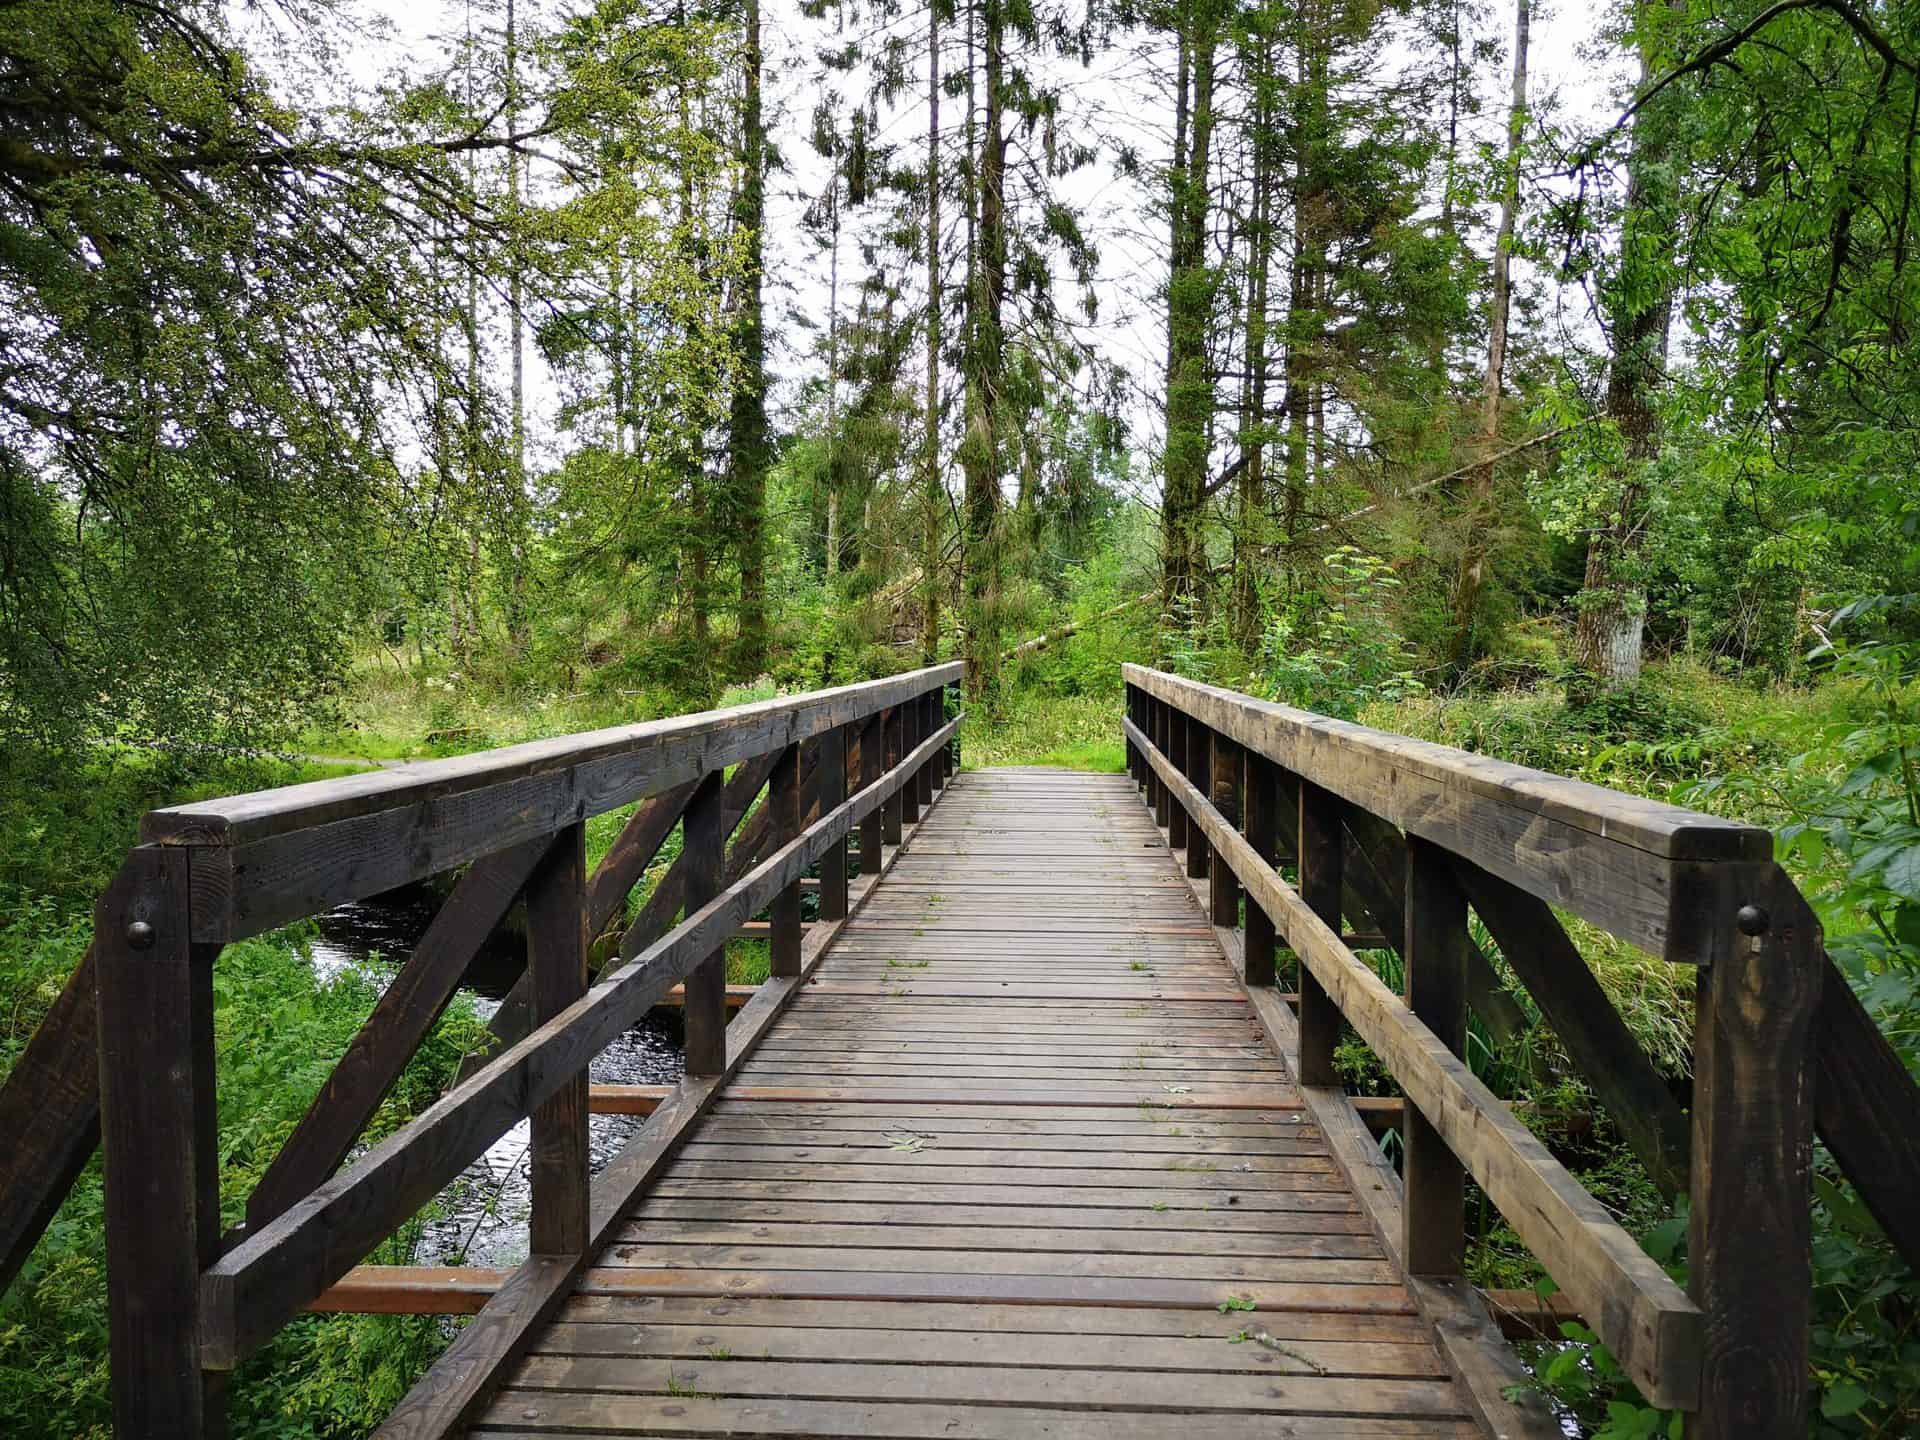 A wooden foot bridge through a forest in Ireland